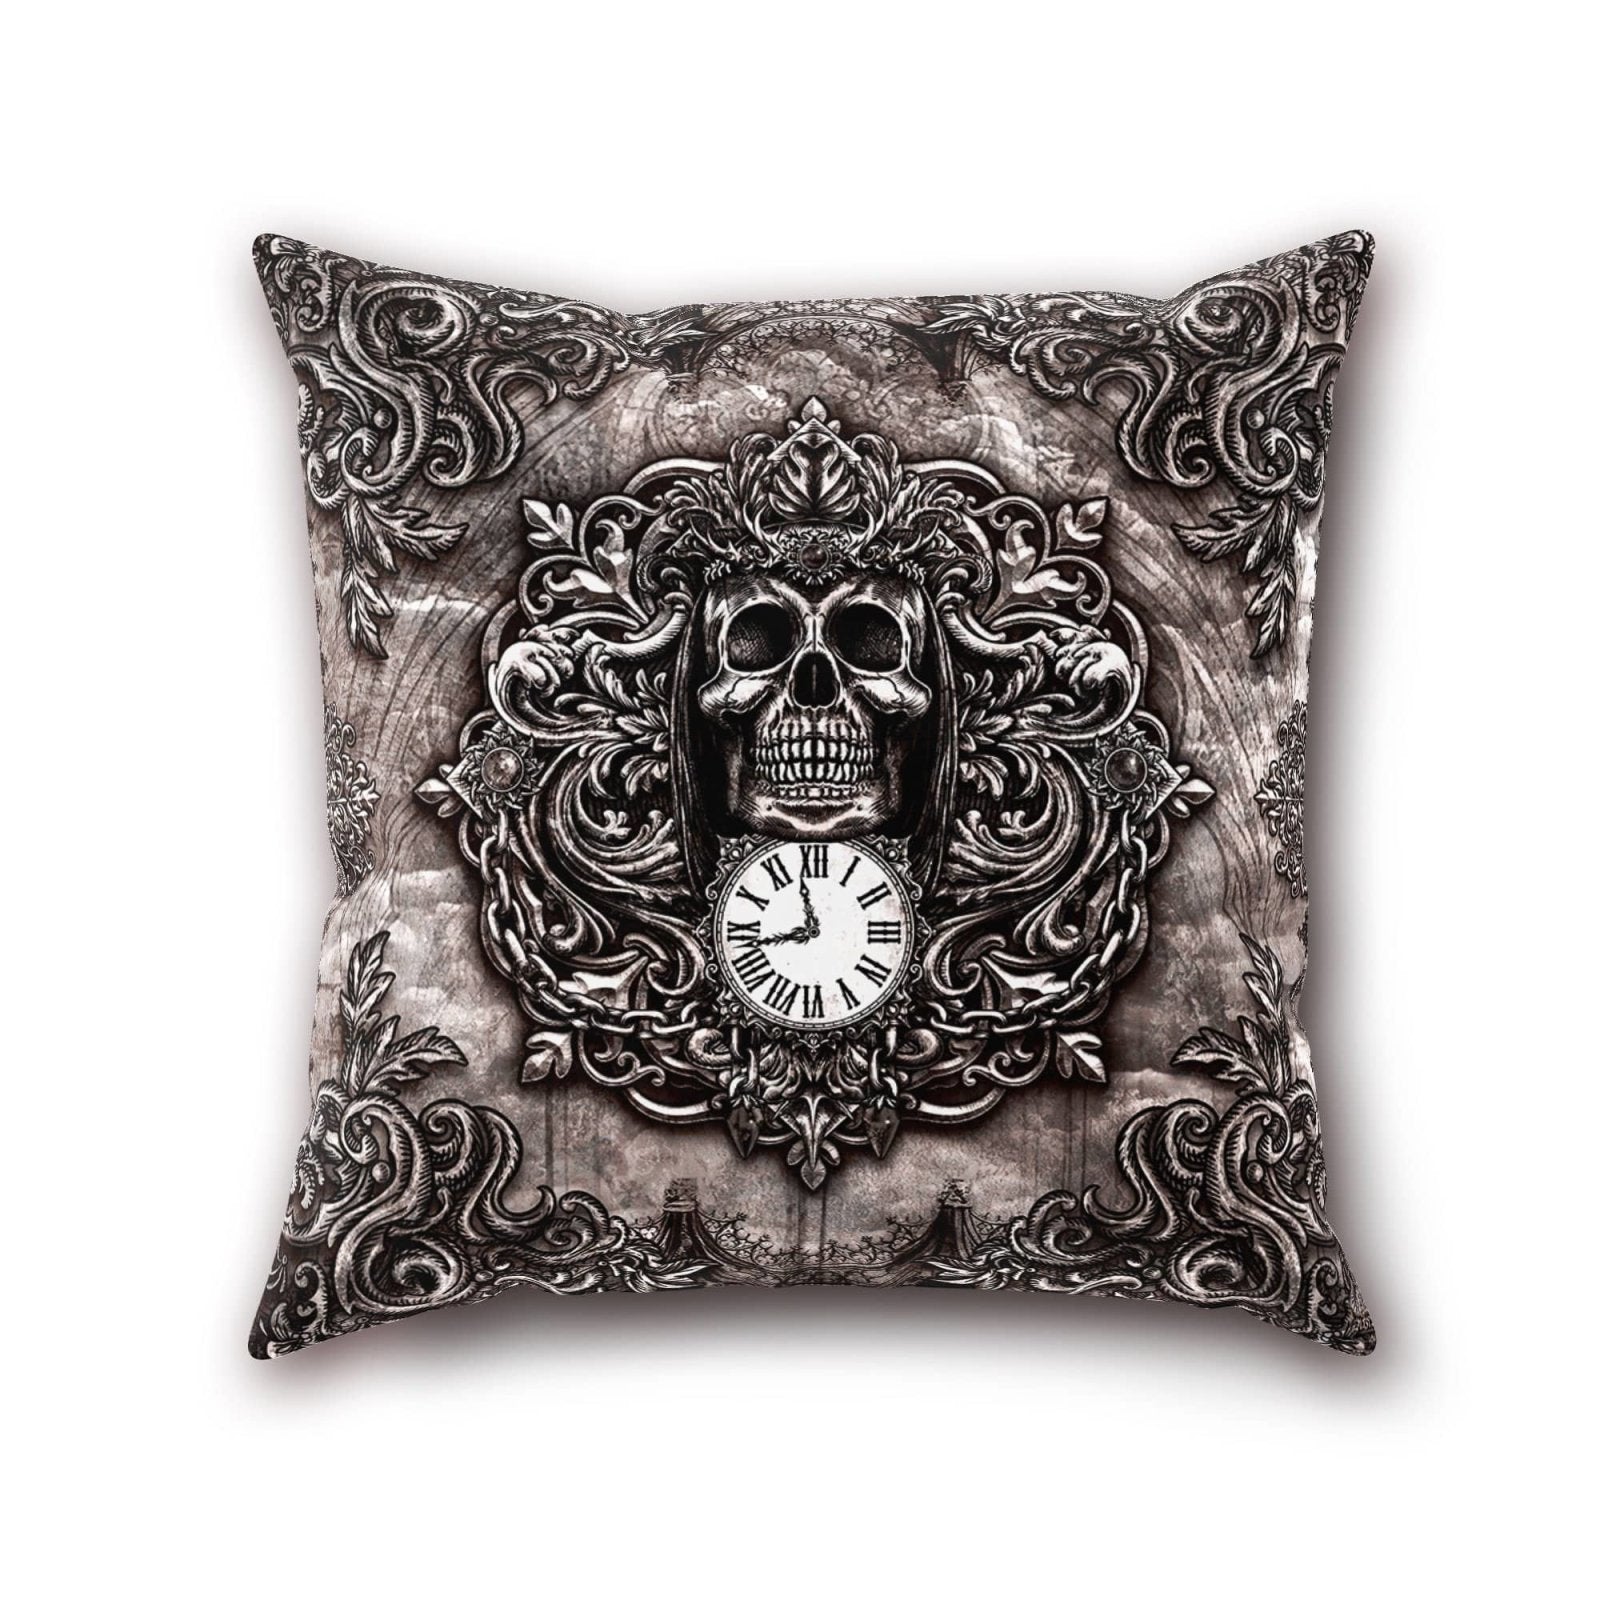 Gothic Throw Pillow, Decorative Accent Cushion, Grim Reaper, Memeto Mori, Skull Art, Goth Room Decor, Alternative Home - 3 Colors - Abysm Internal